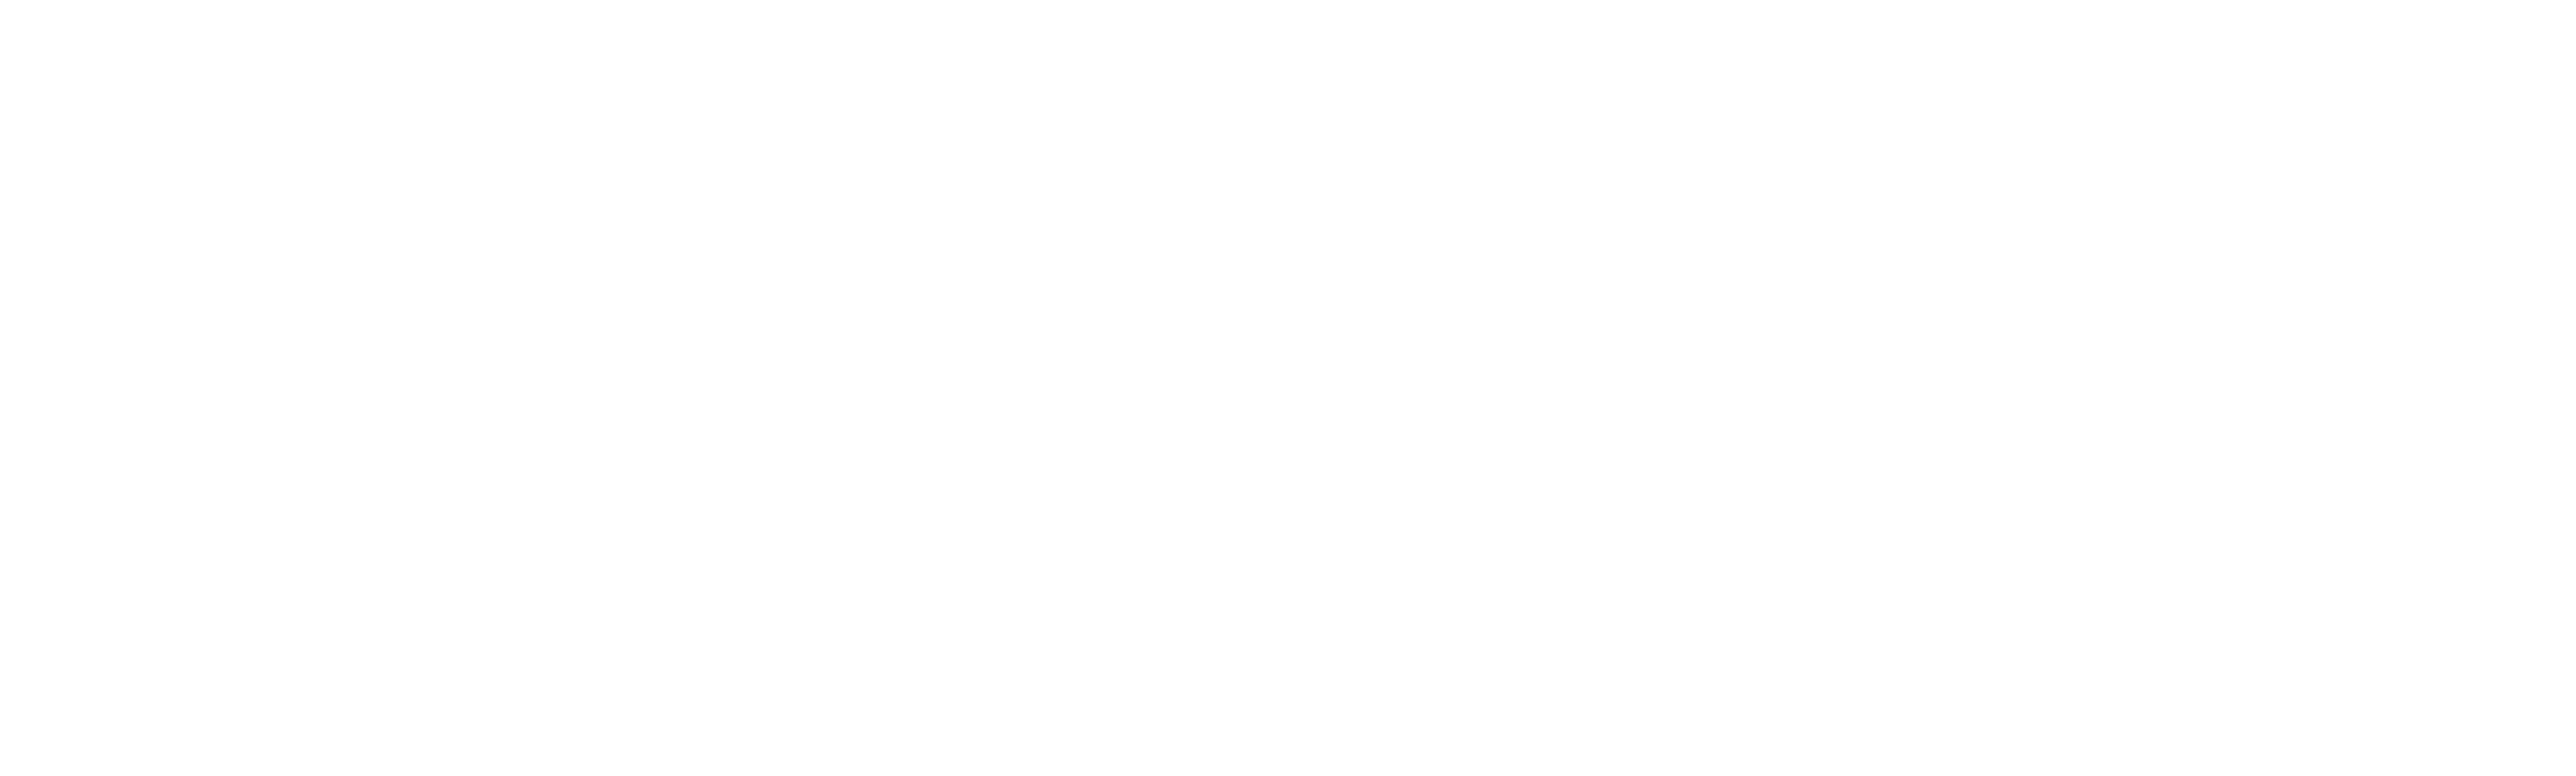 Security in practice